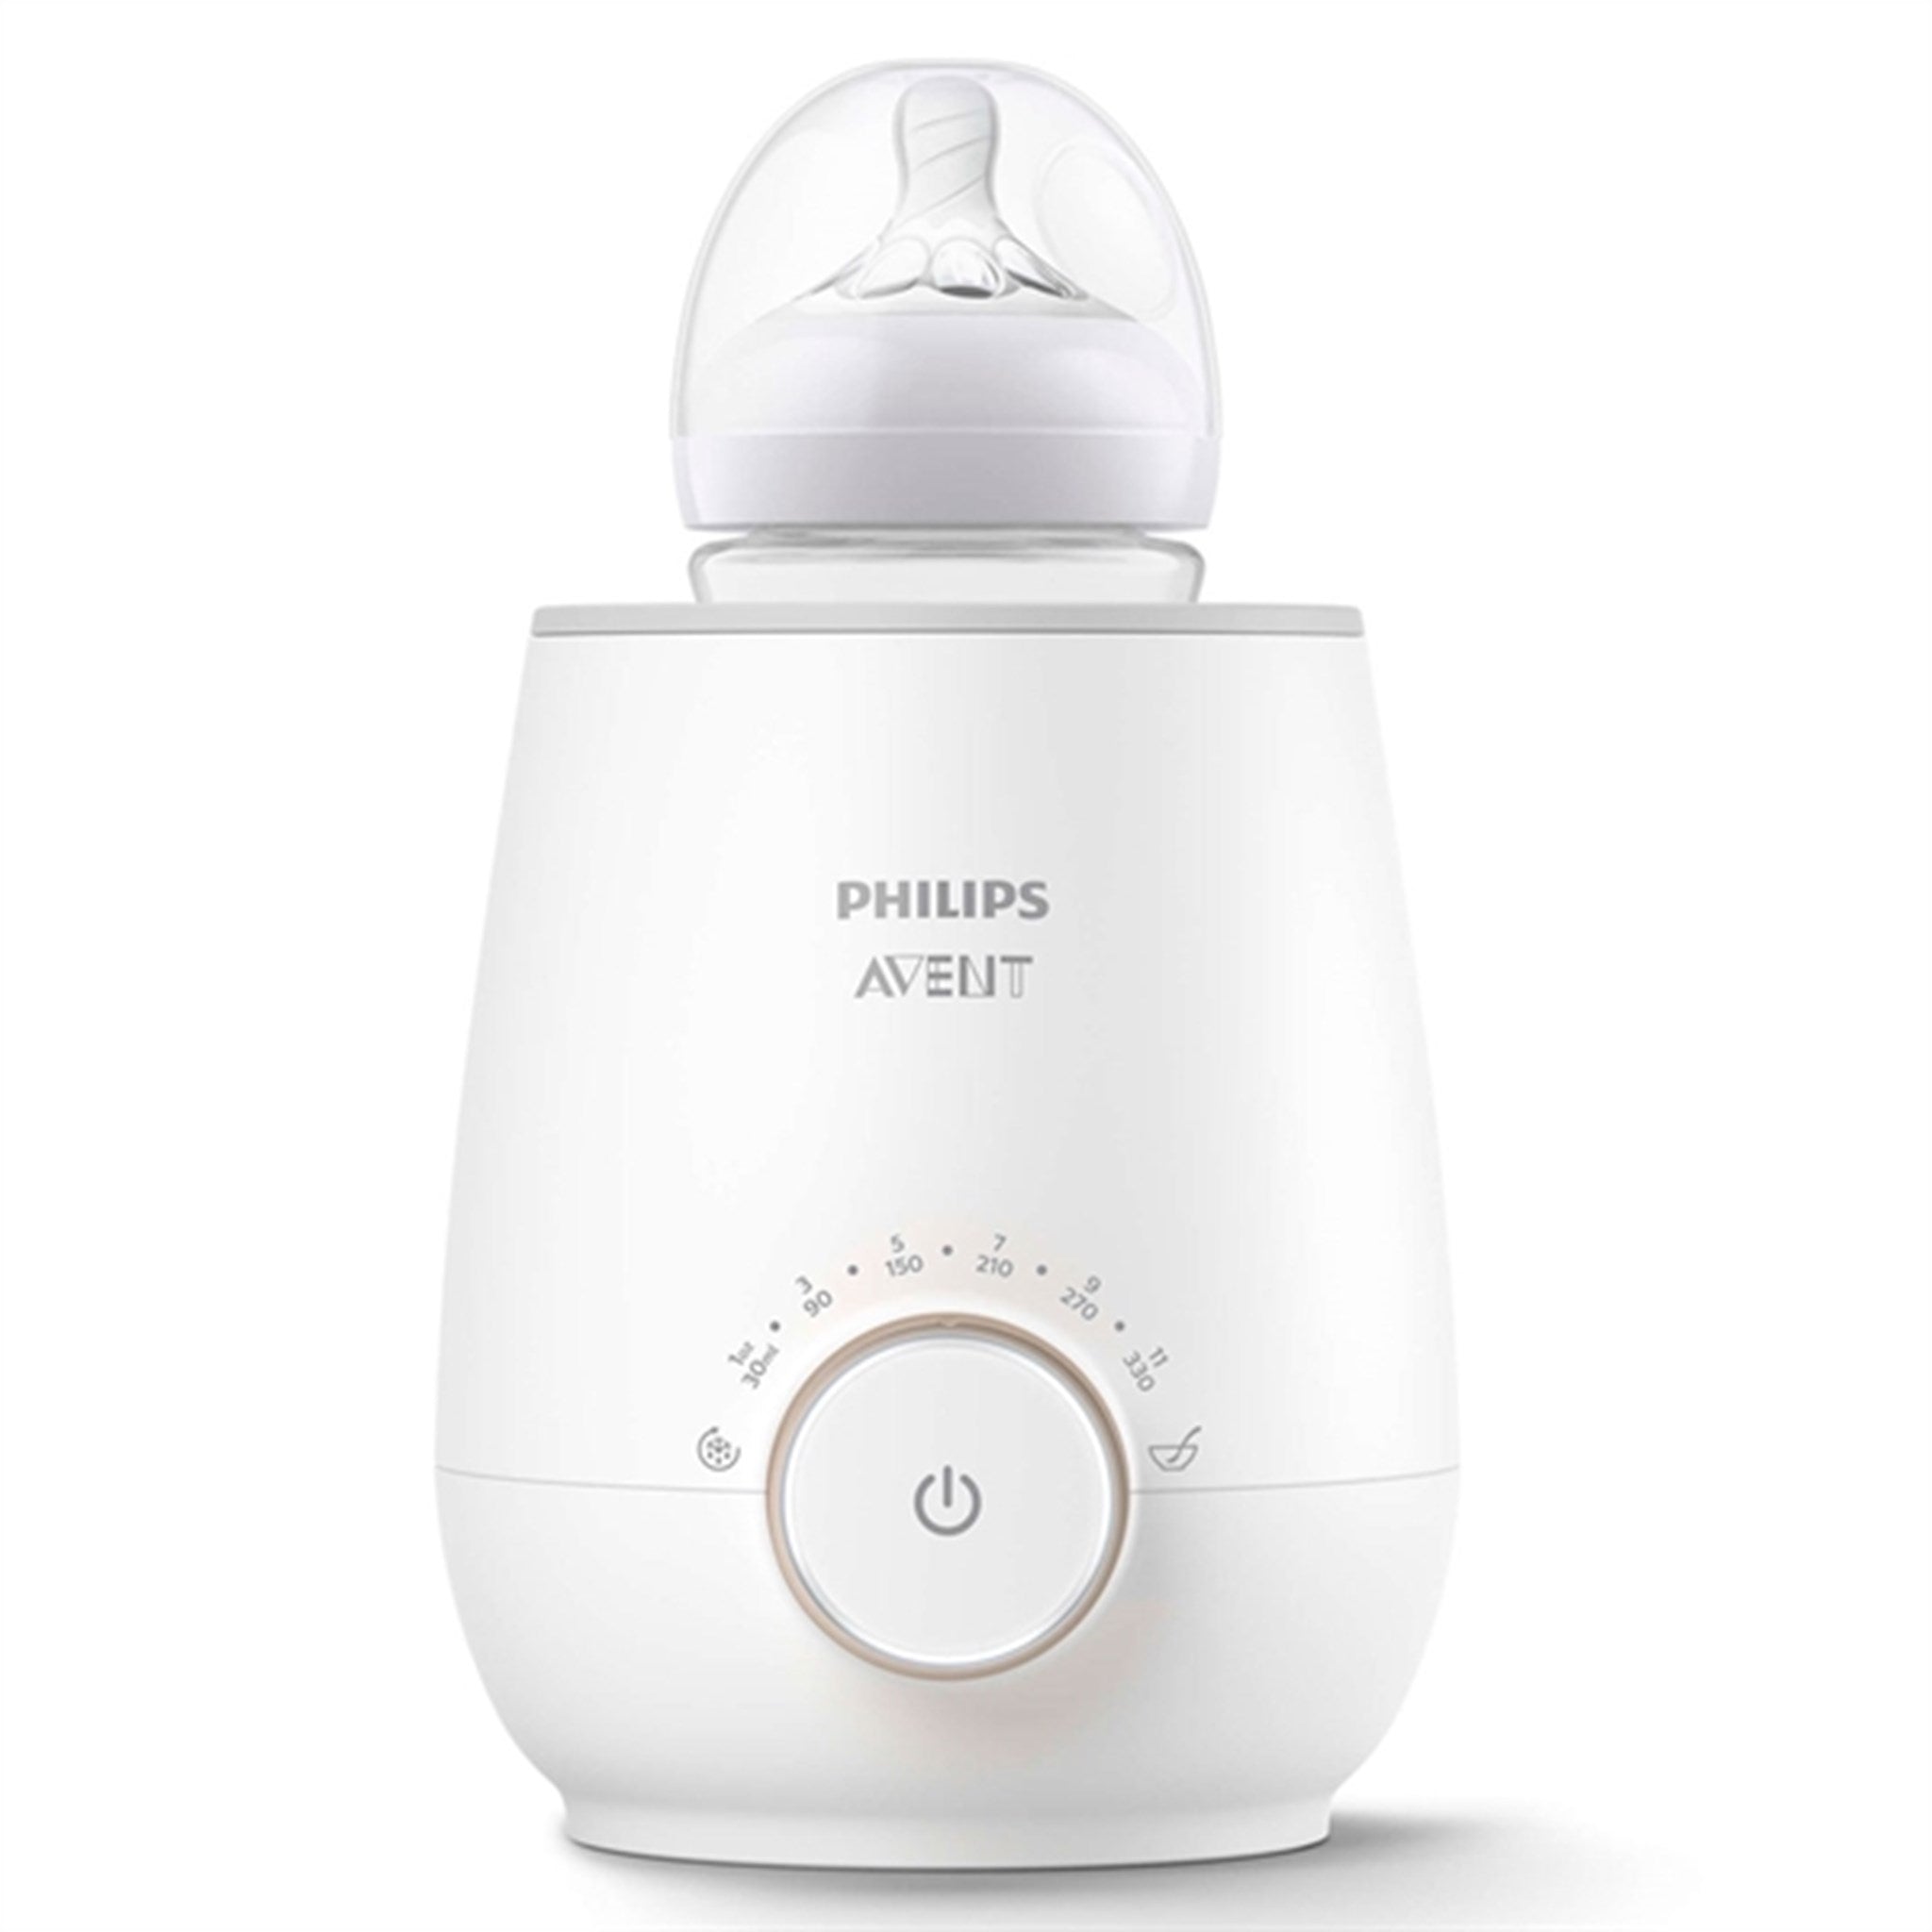 Philips Avent Quick Bottle Warmer